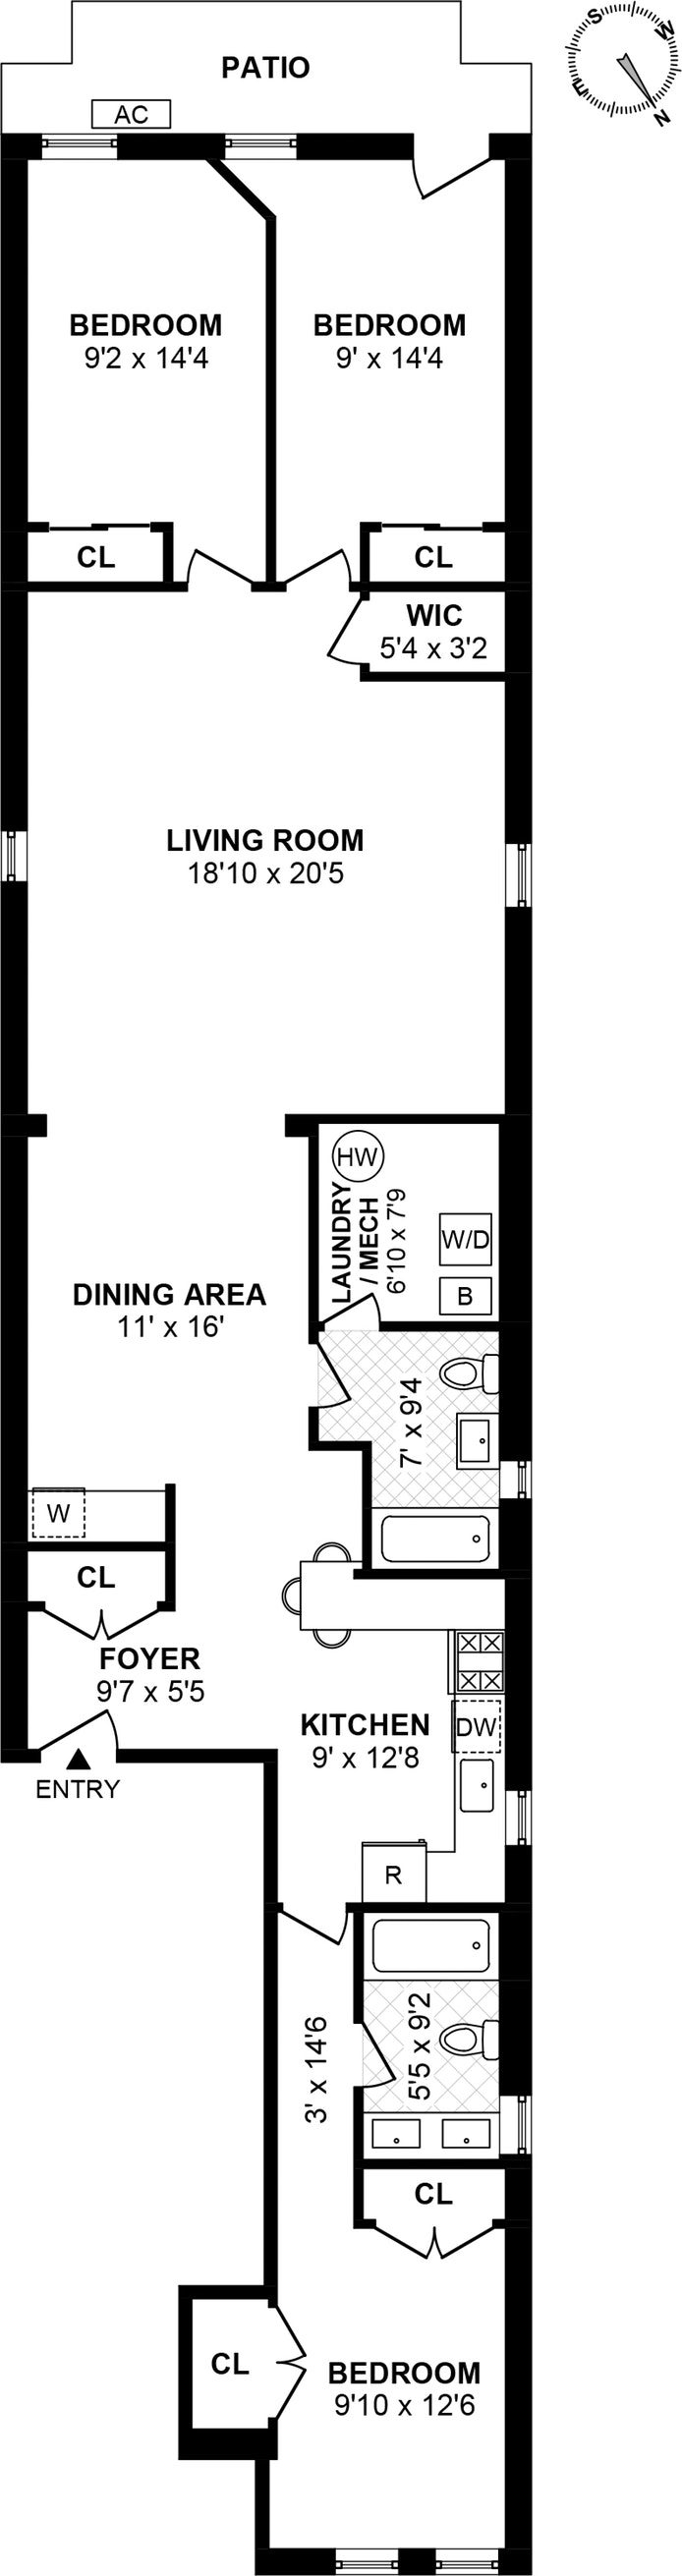 Floorplan for 260, 18th Street, 1